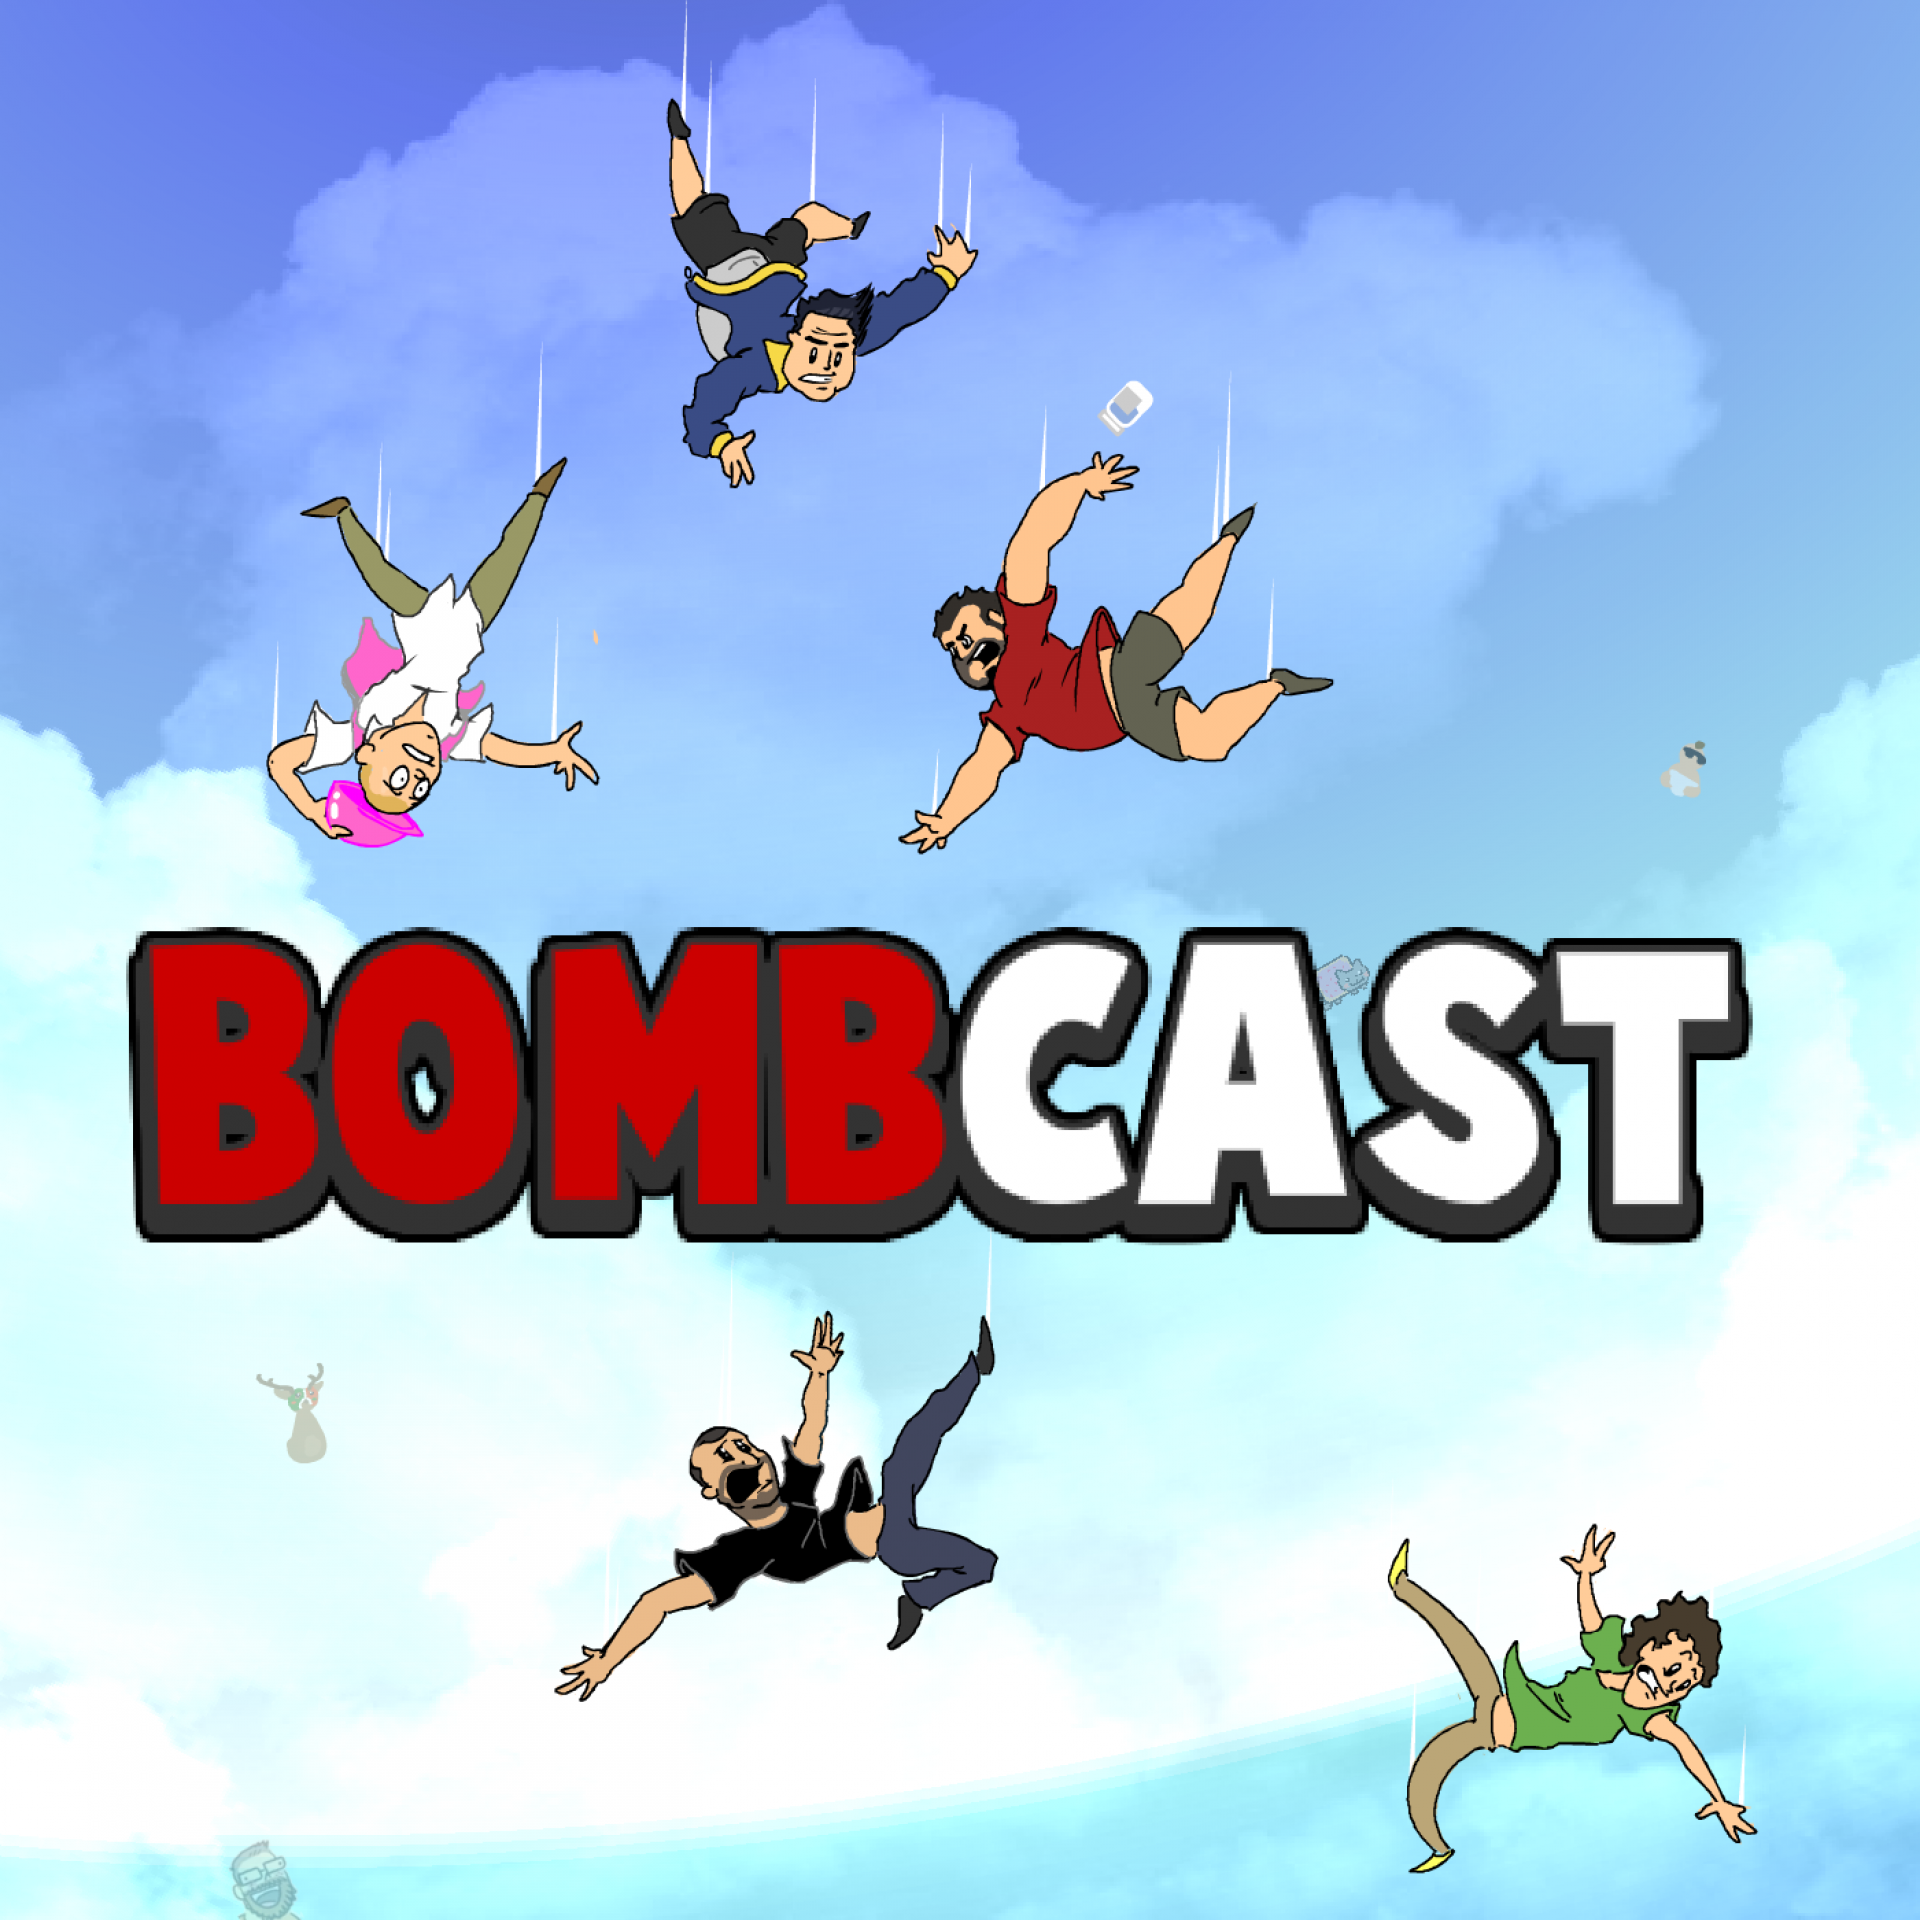 Bombcast falling art